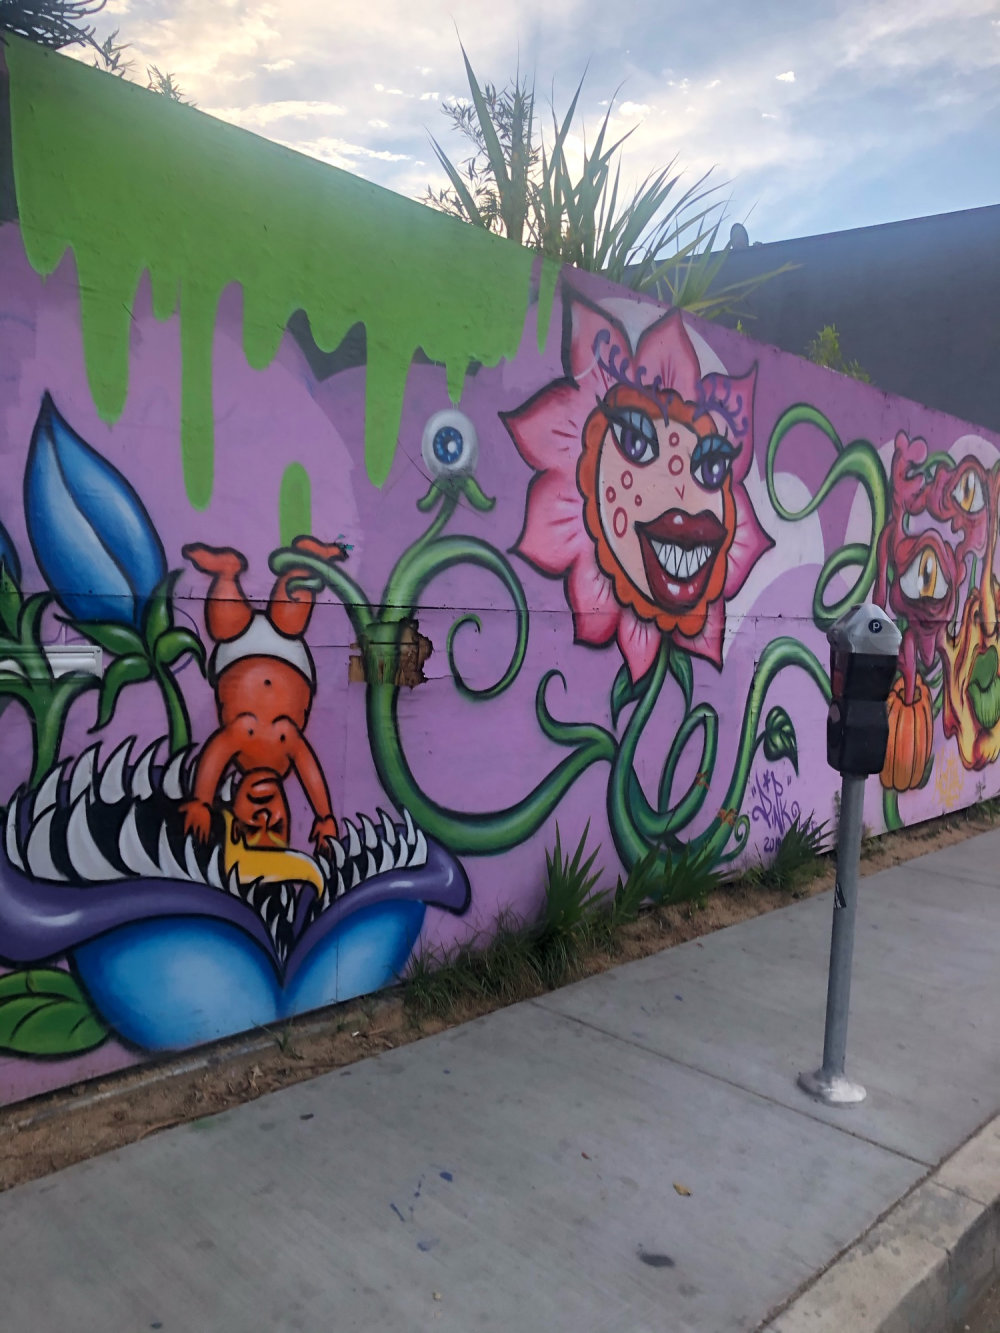 mural in Los Angeles by artist Lady Pink.